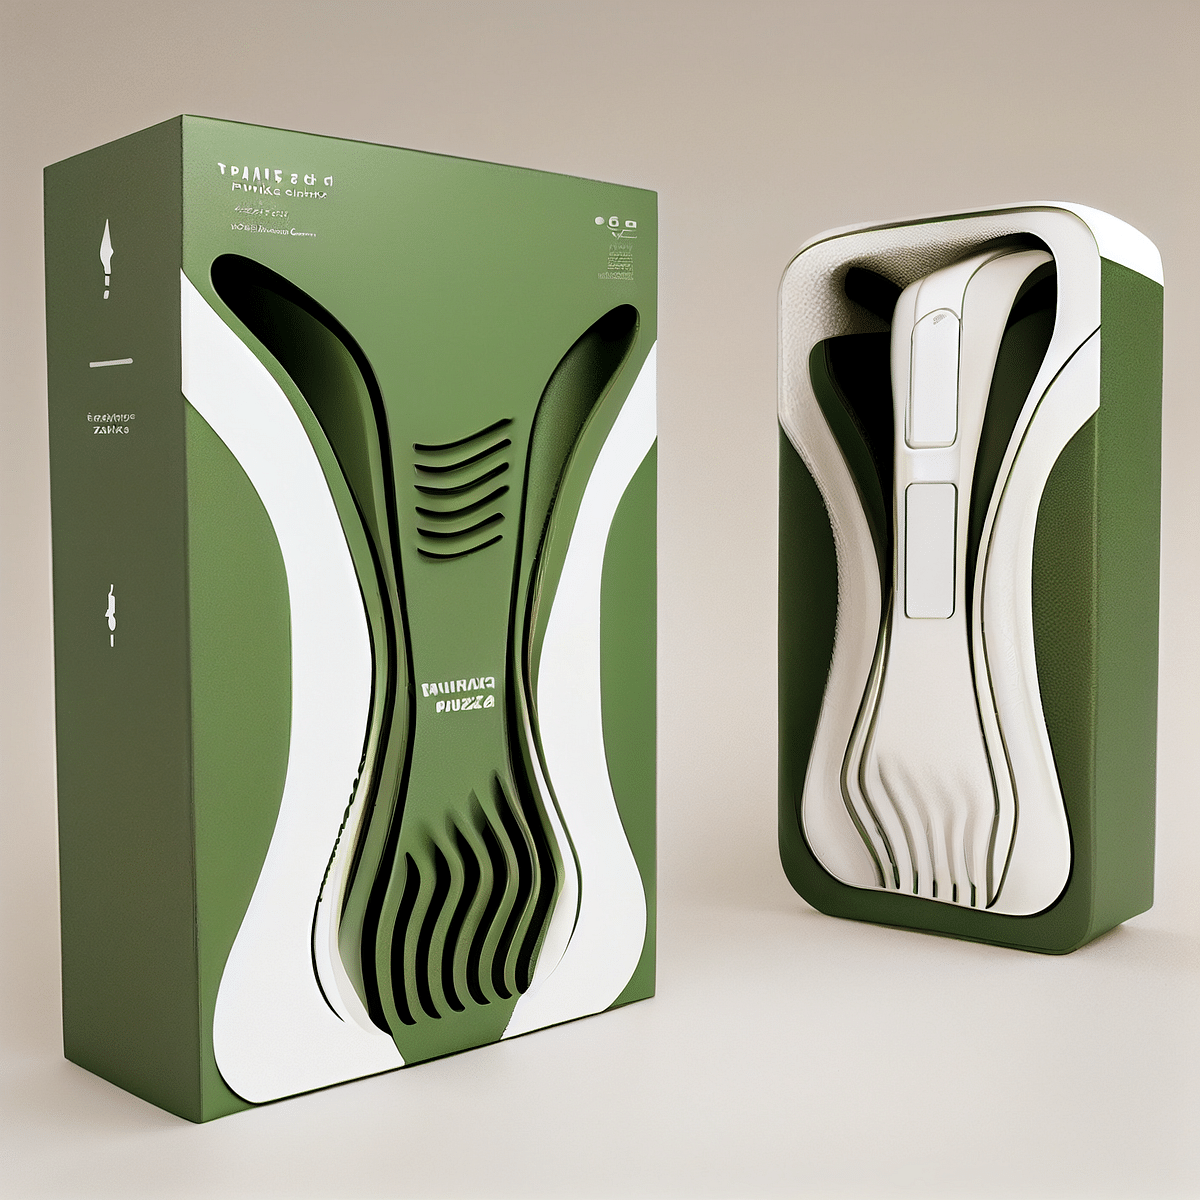 Pinstorm A.I. packaging design